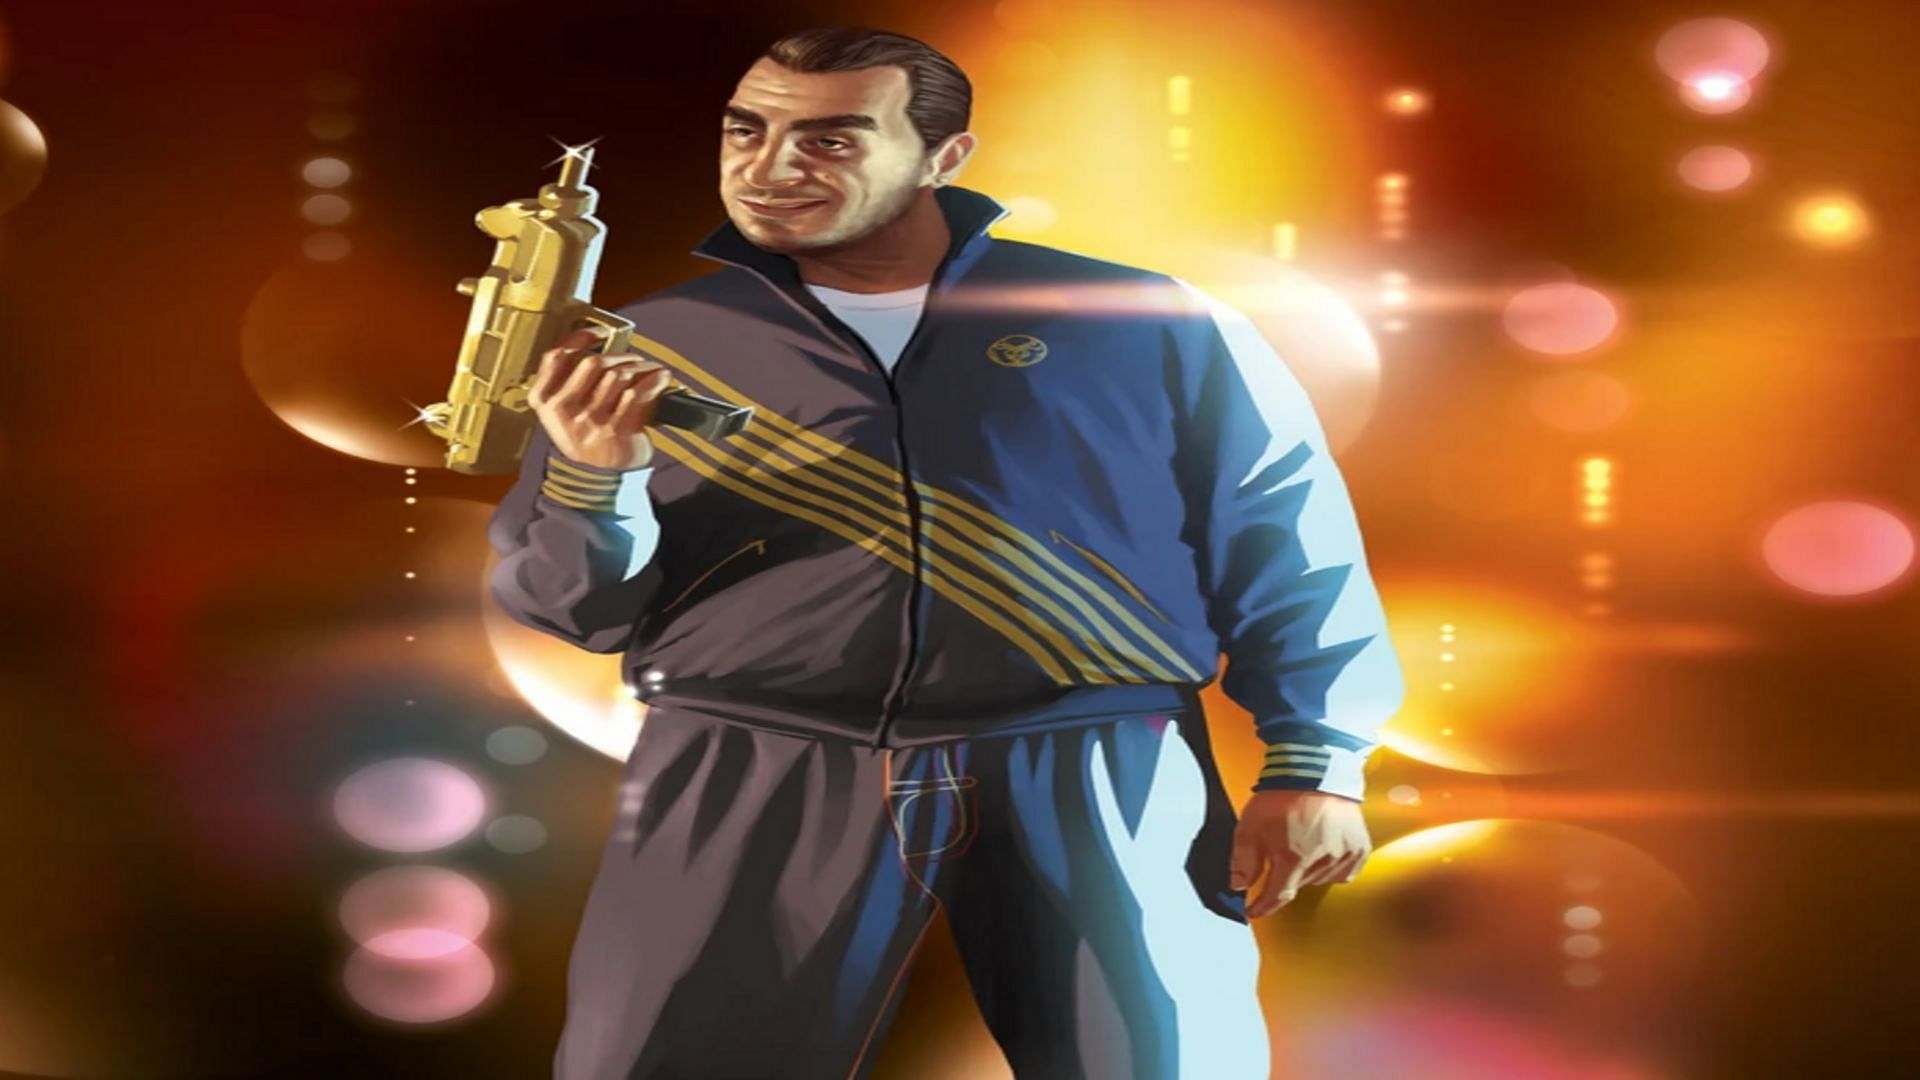 Yusuf Amir from rand Theft Auto: The Ballad of Gay Tony (Image via Rockstar Games)